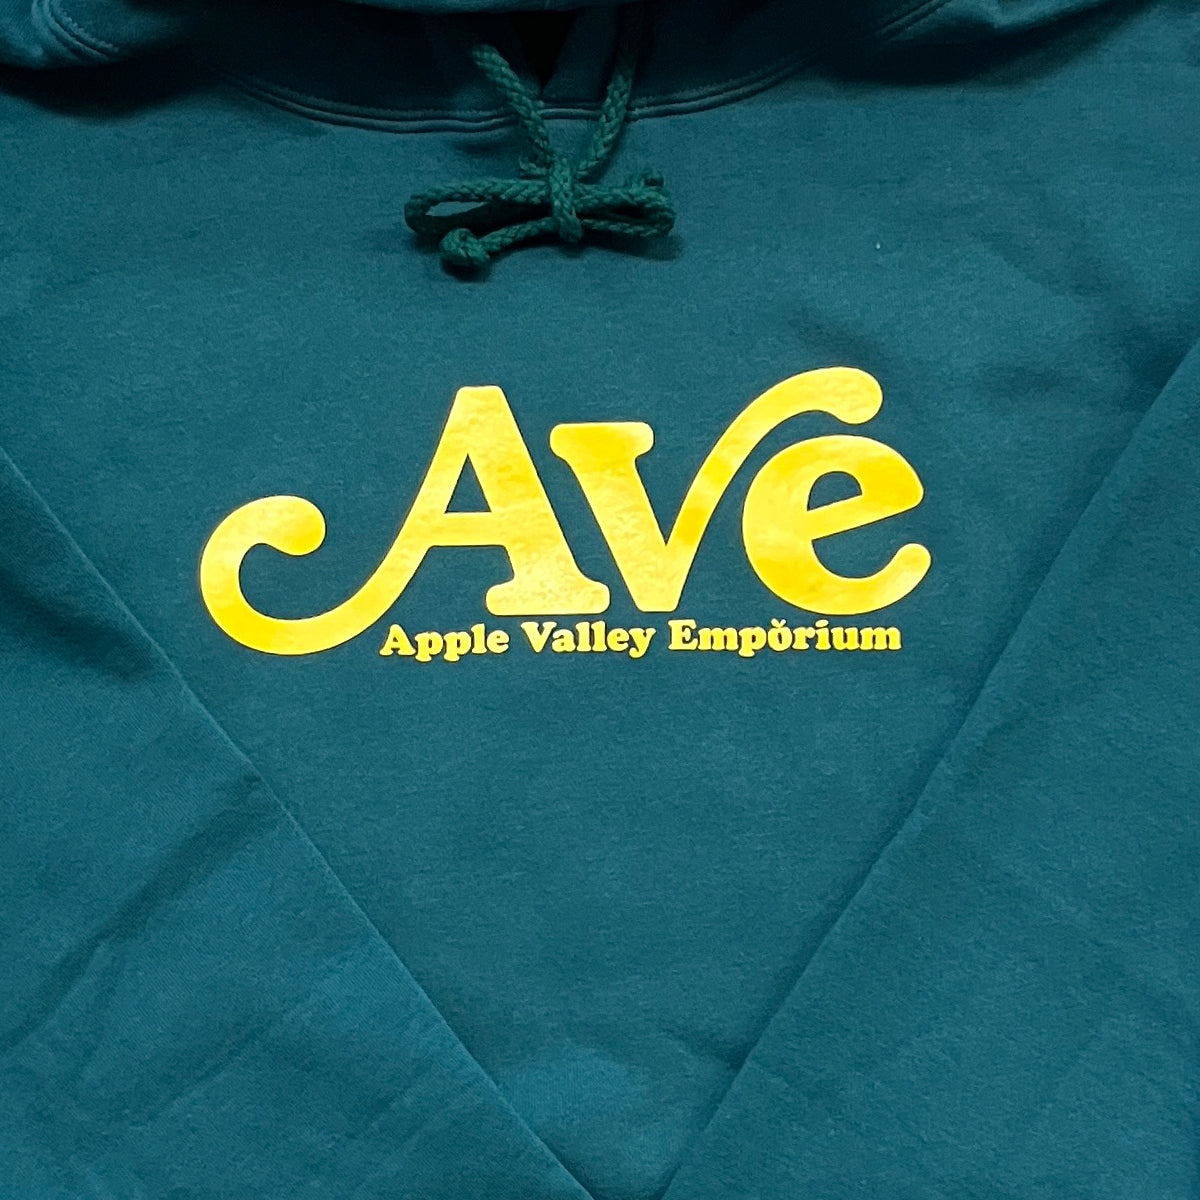 AVE Script Hooded Sweatshirt (Forest Green/Gold) - Apple Valley Emporium